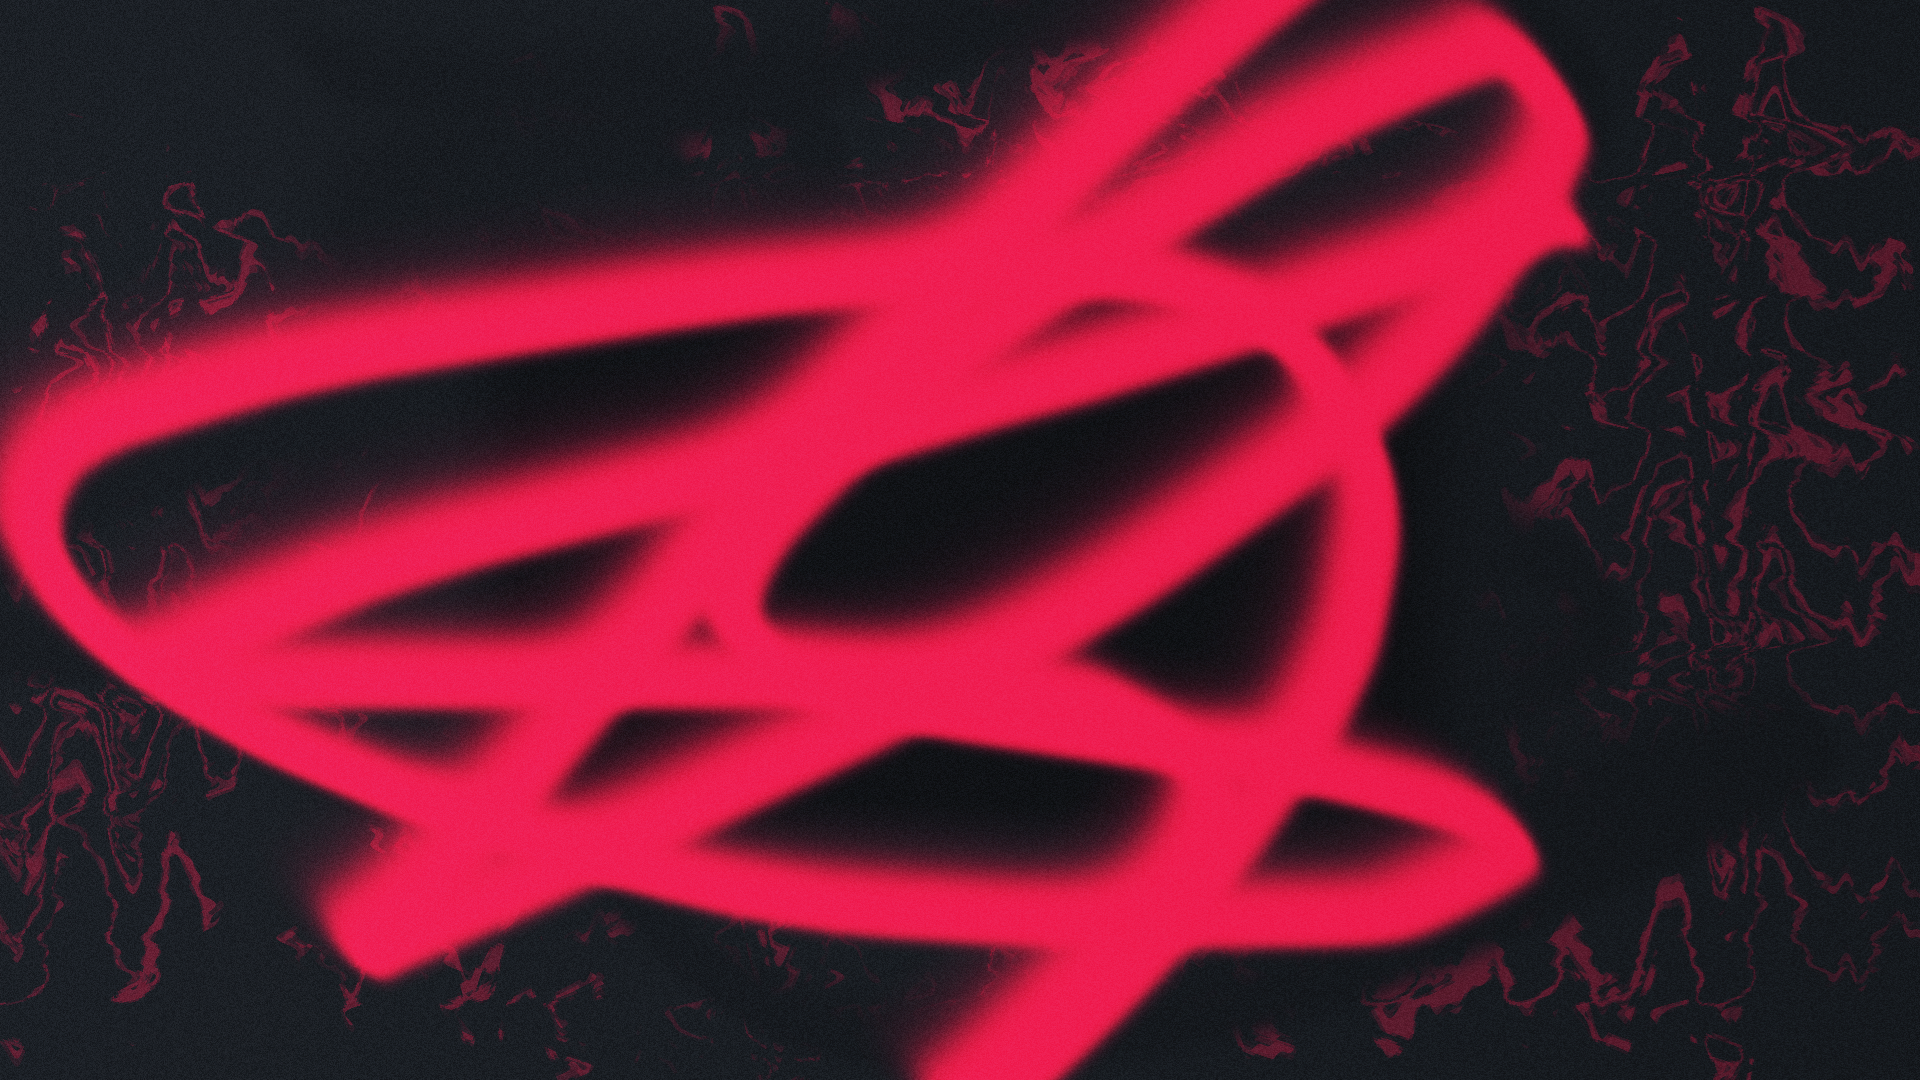 General 1920x1080 abstract dark graffiti photoshopped red red background minimalism digital art glitch art